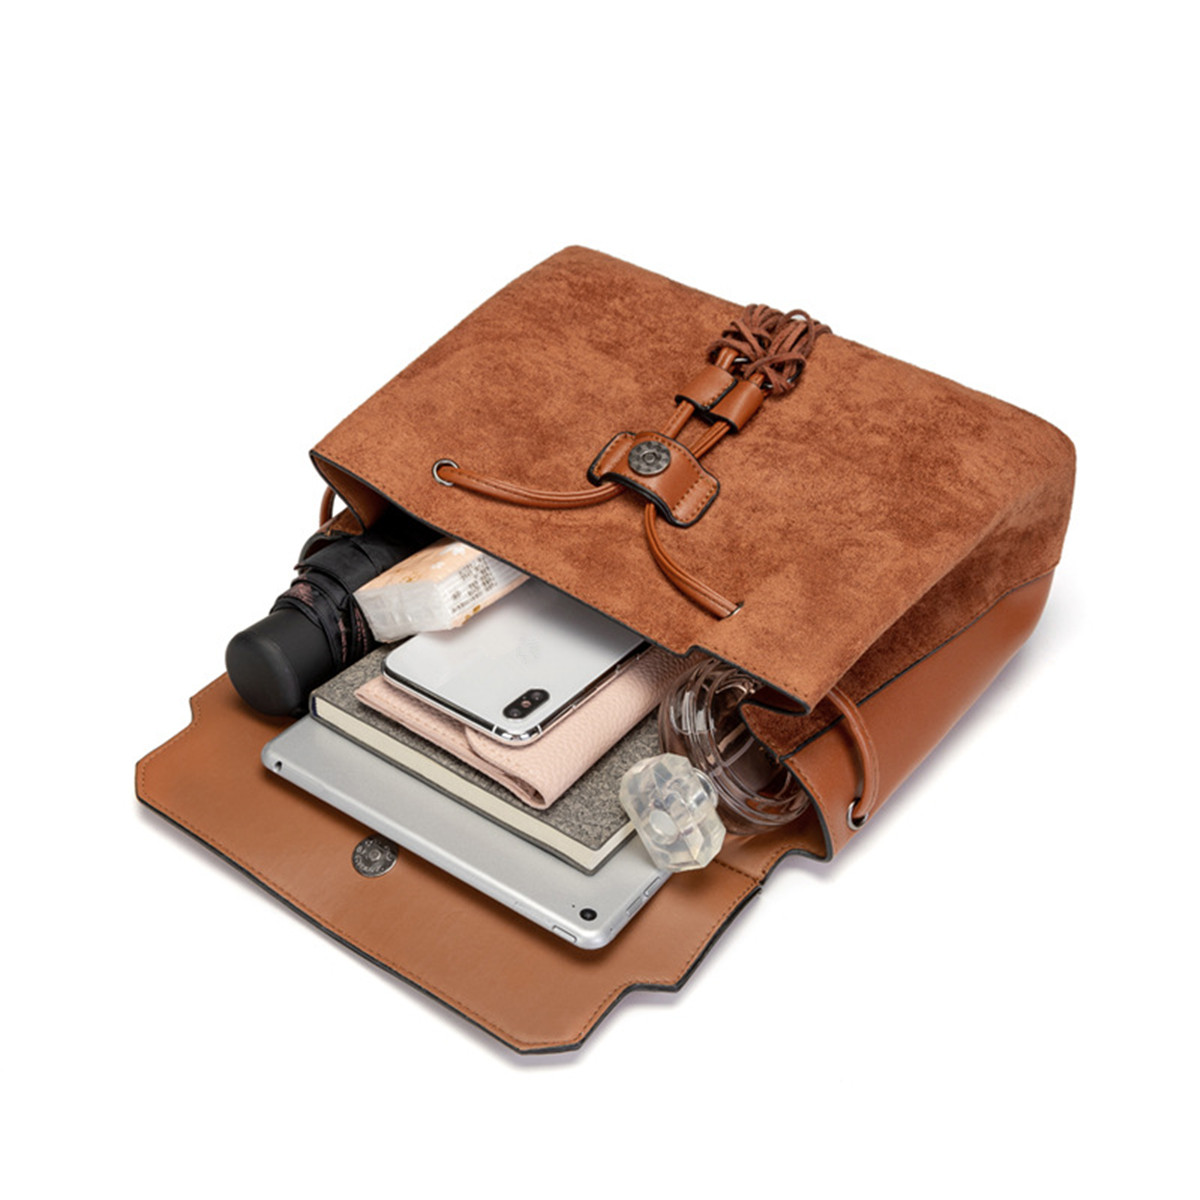 Outdoor-PU-Leather-Backpack-Women-Tassel-Handbag-School-Bag-Travel-Rucksack-1627681-6